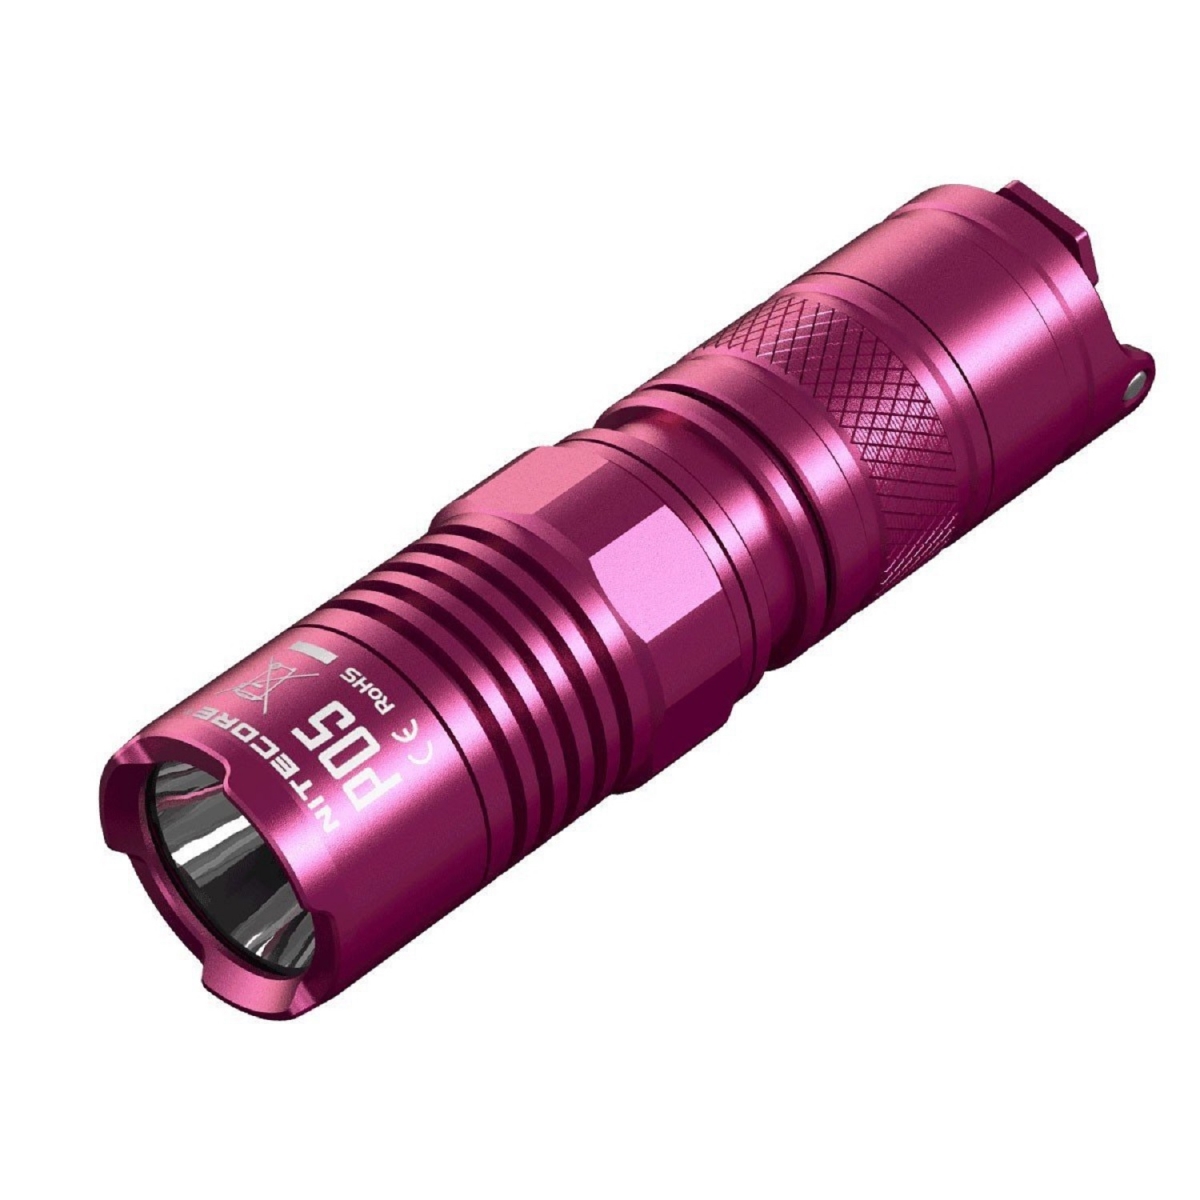 Nitecore Sysmax Industrial 9004733 460 Lumen Compact Led Self-defense Flashlight - Pink